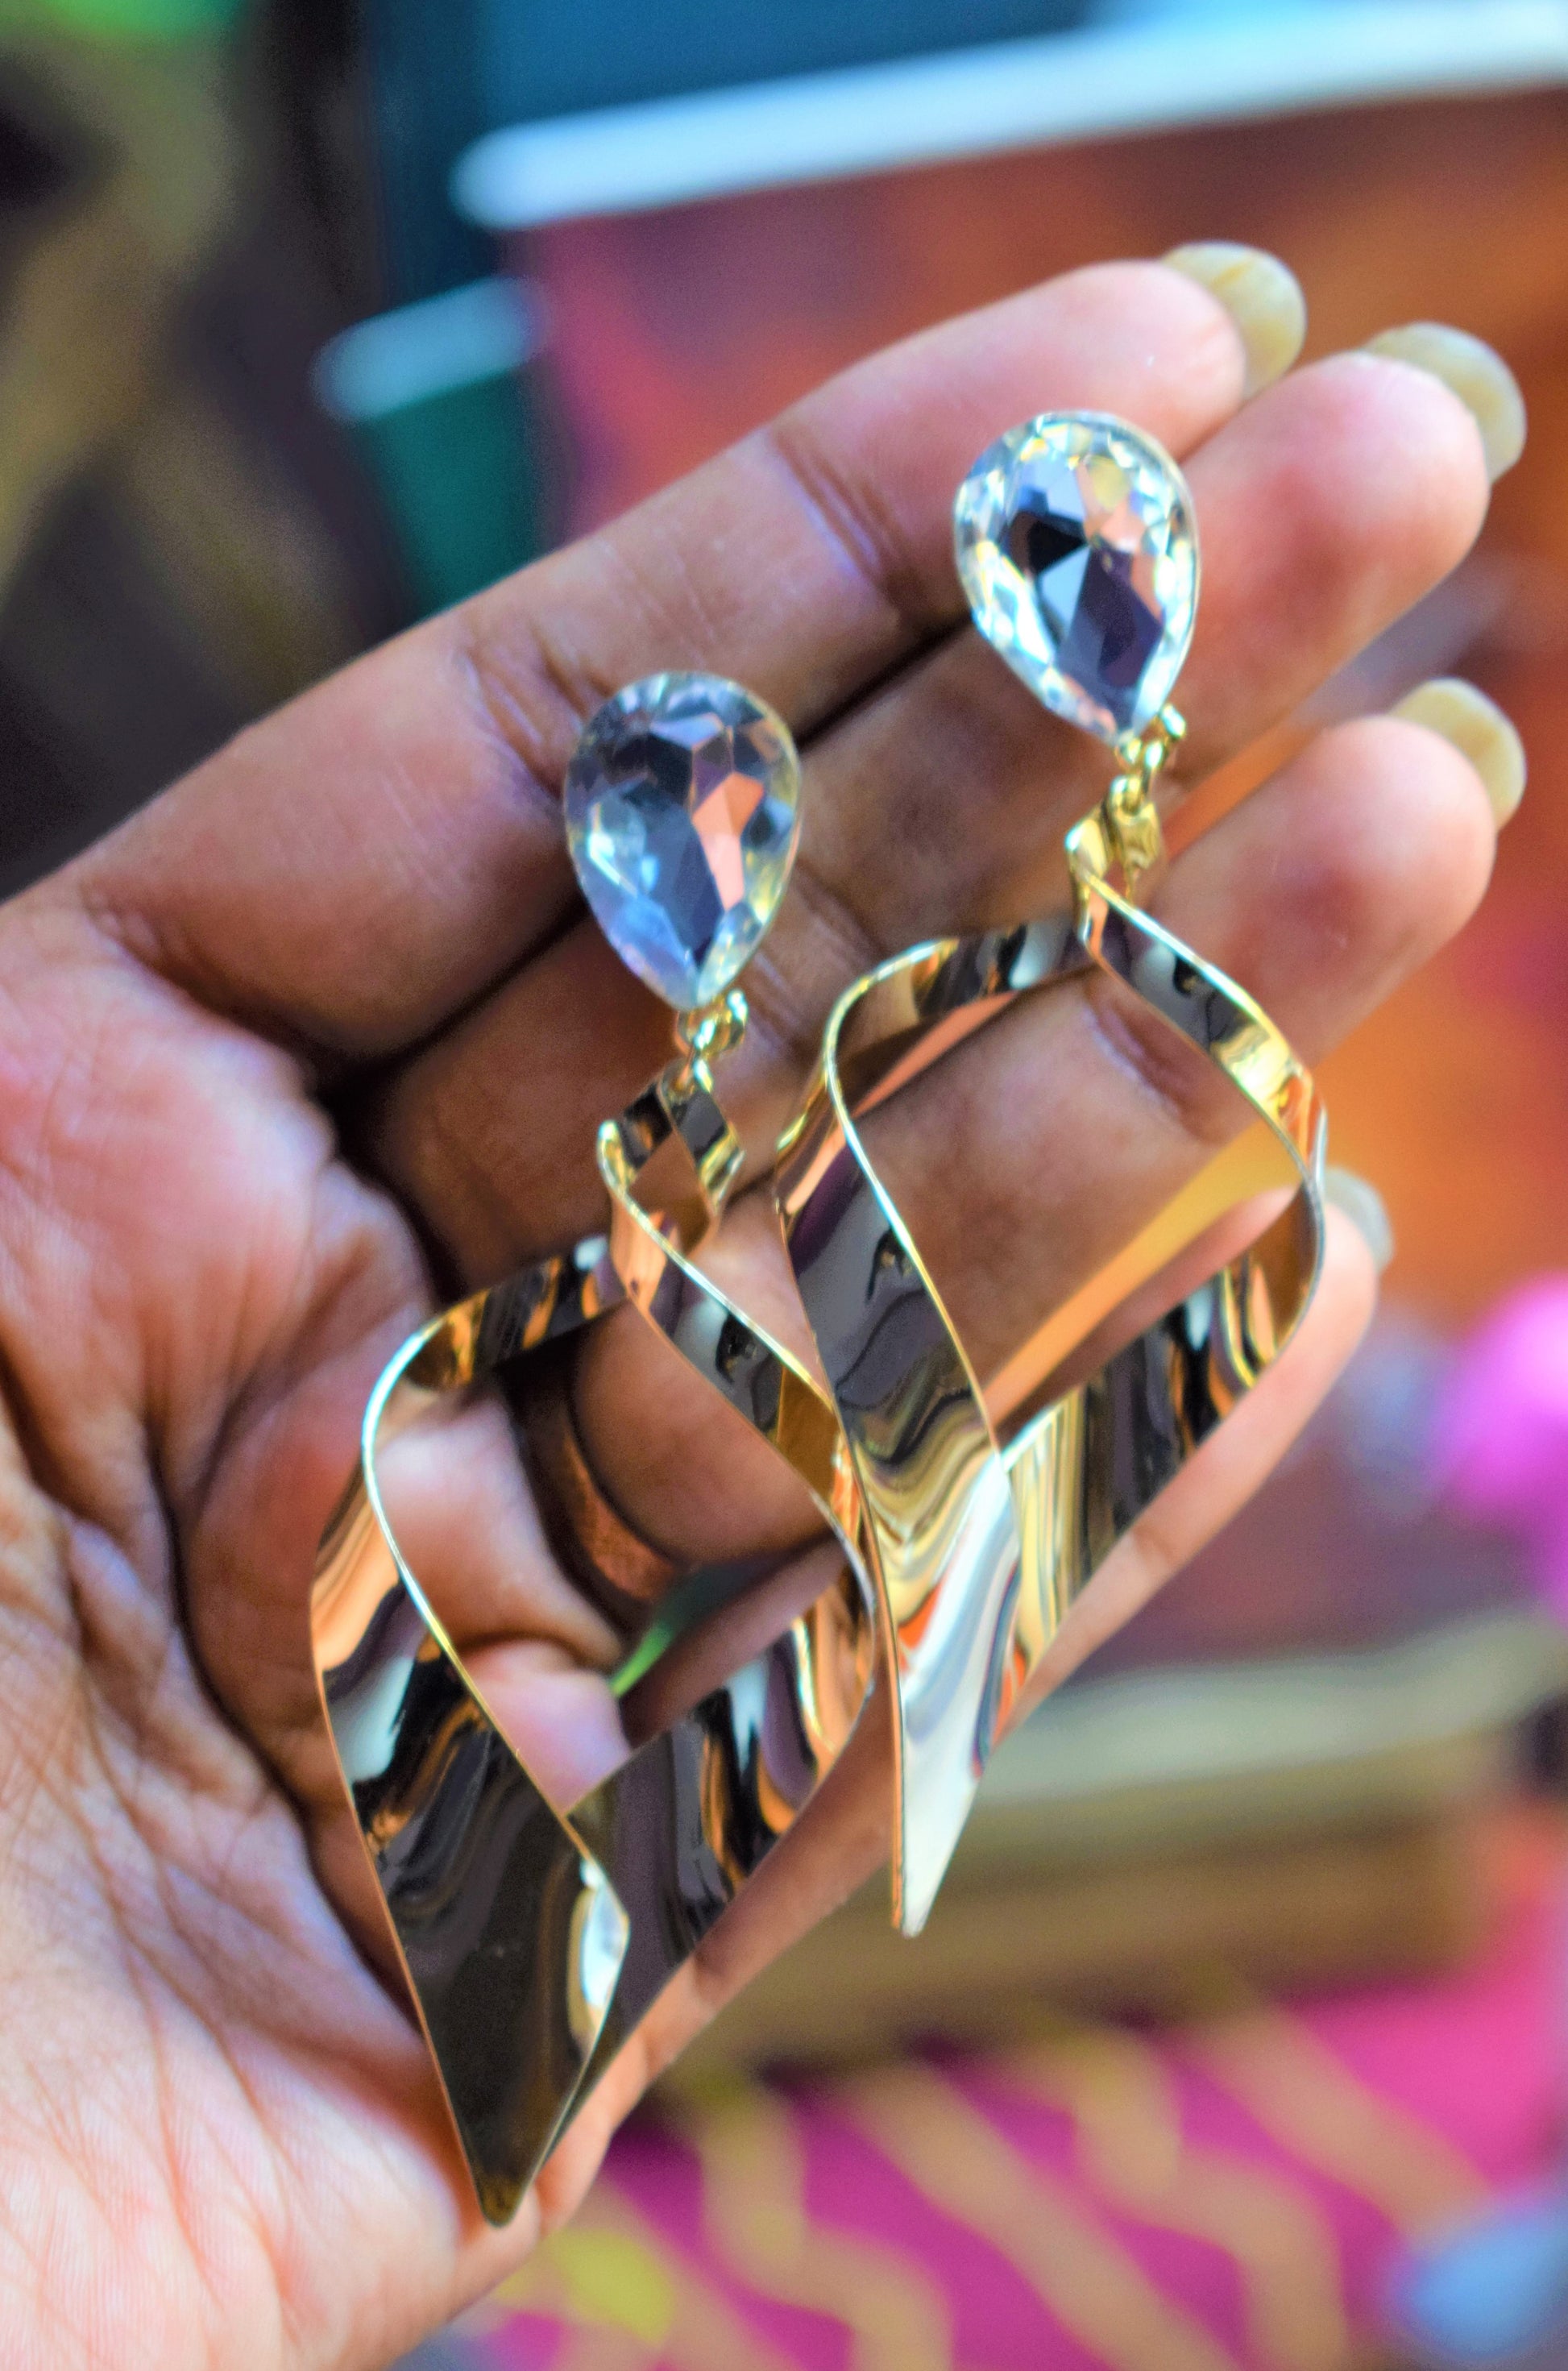 Silver Curled Crystal Earrings - GlitterGleam